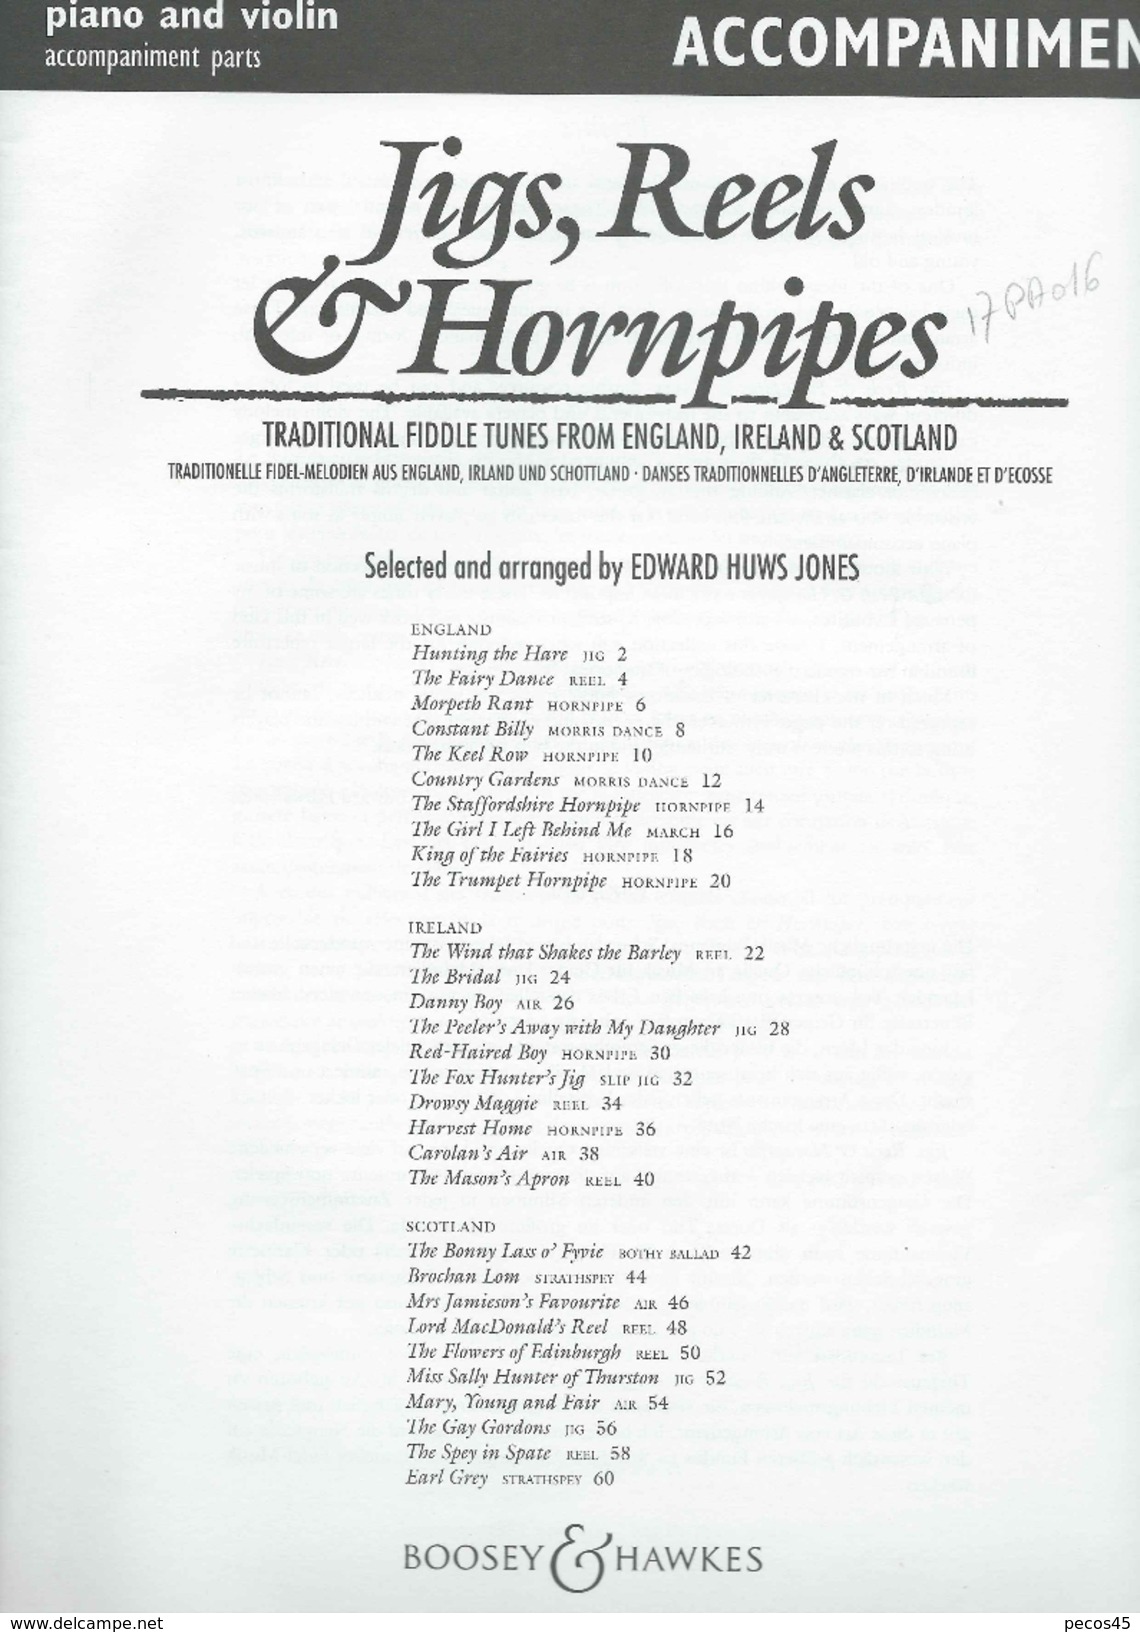 "JIGS, REELS & HORNPIPES" - Editions Boosey & Hawkes / London - 1992. - Folk Music